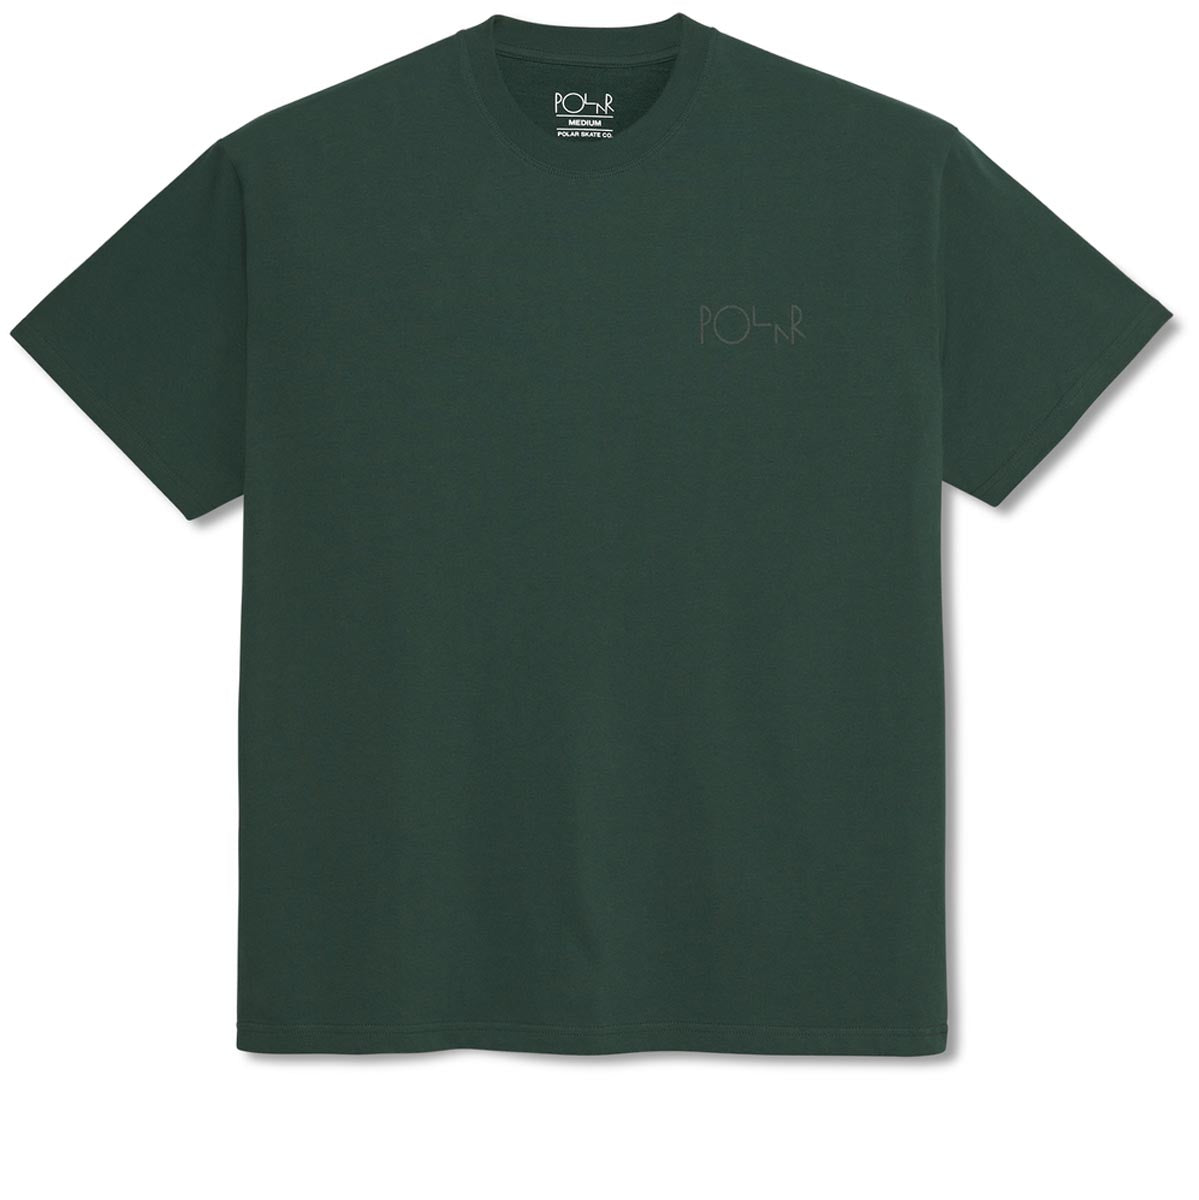 Polar Stroke Logo T-Shirt - Green image 2